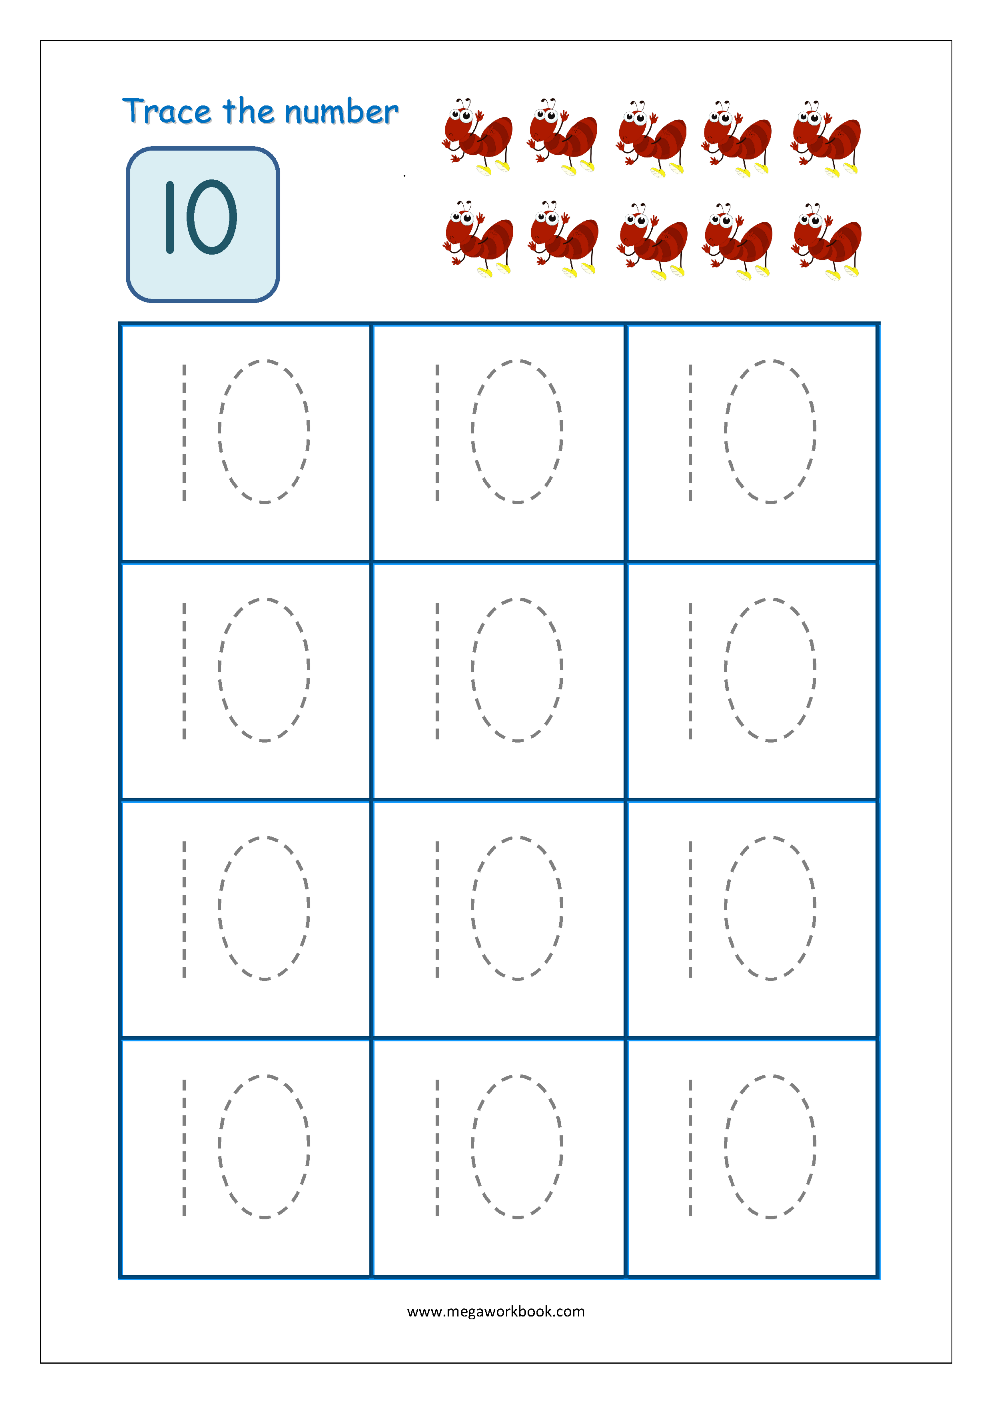 tracing-number-10-worksheets-for-kindergarten-printable-kindergarten